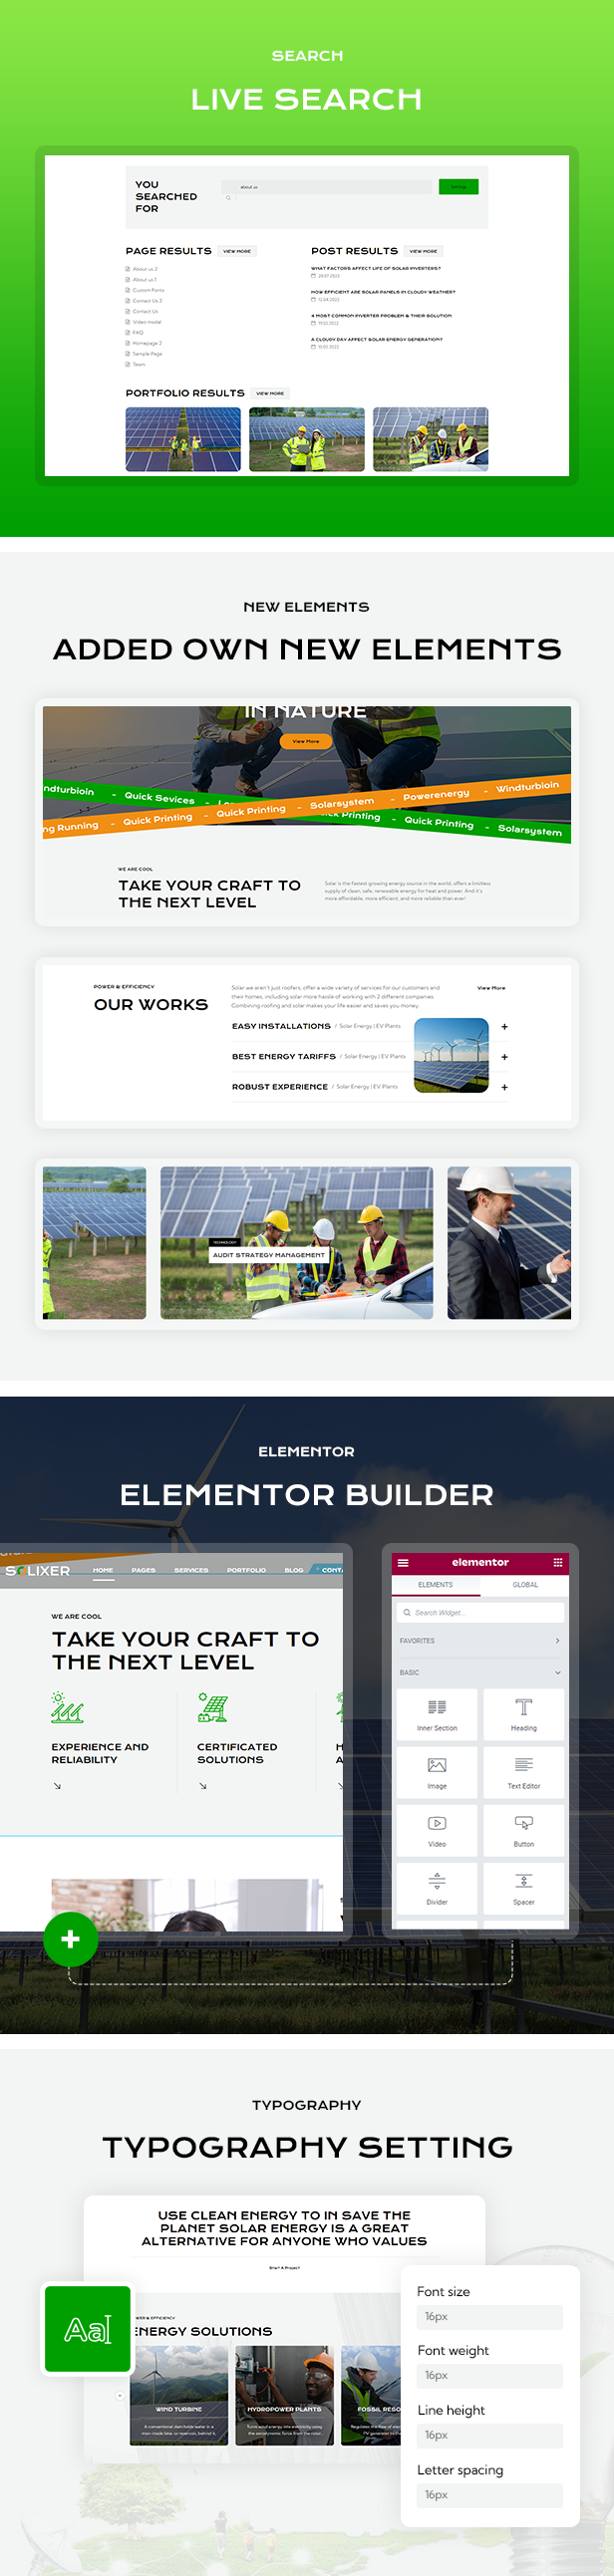 Solixer – Ecology & Solar Energy WordPress Theme